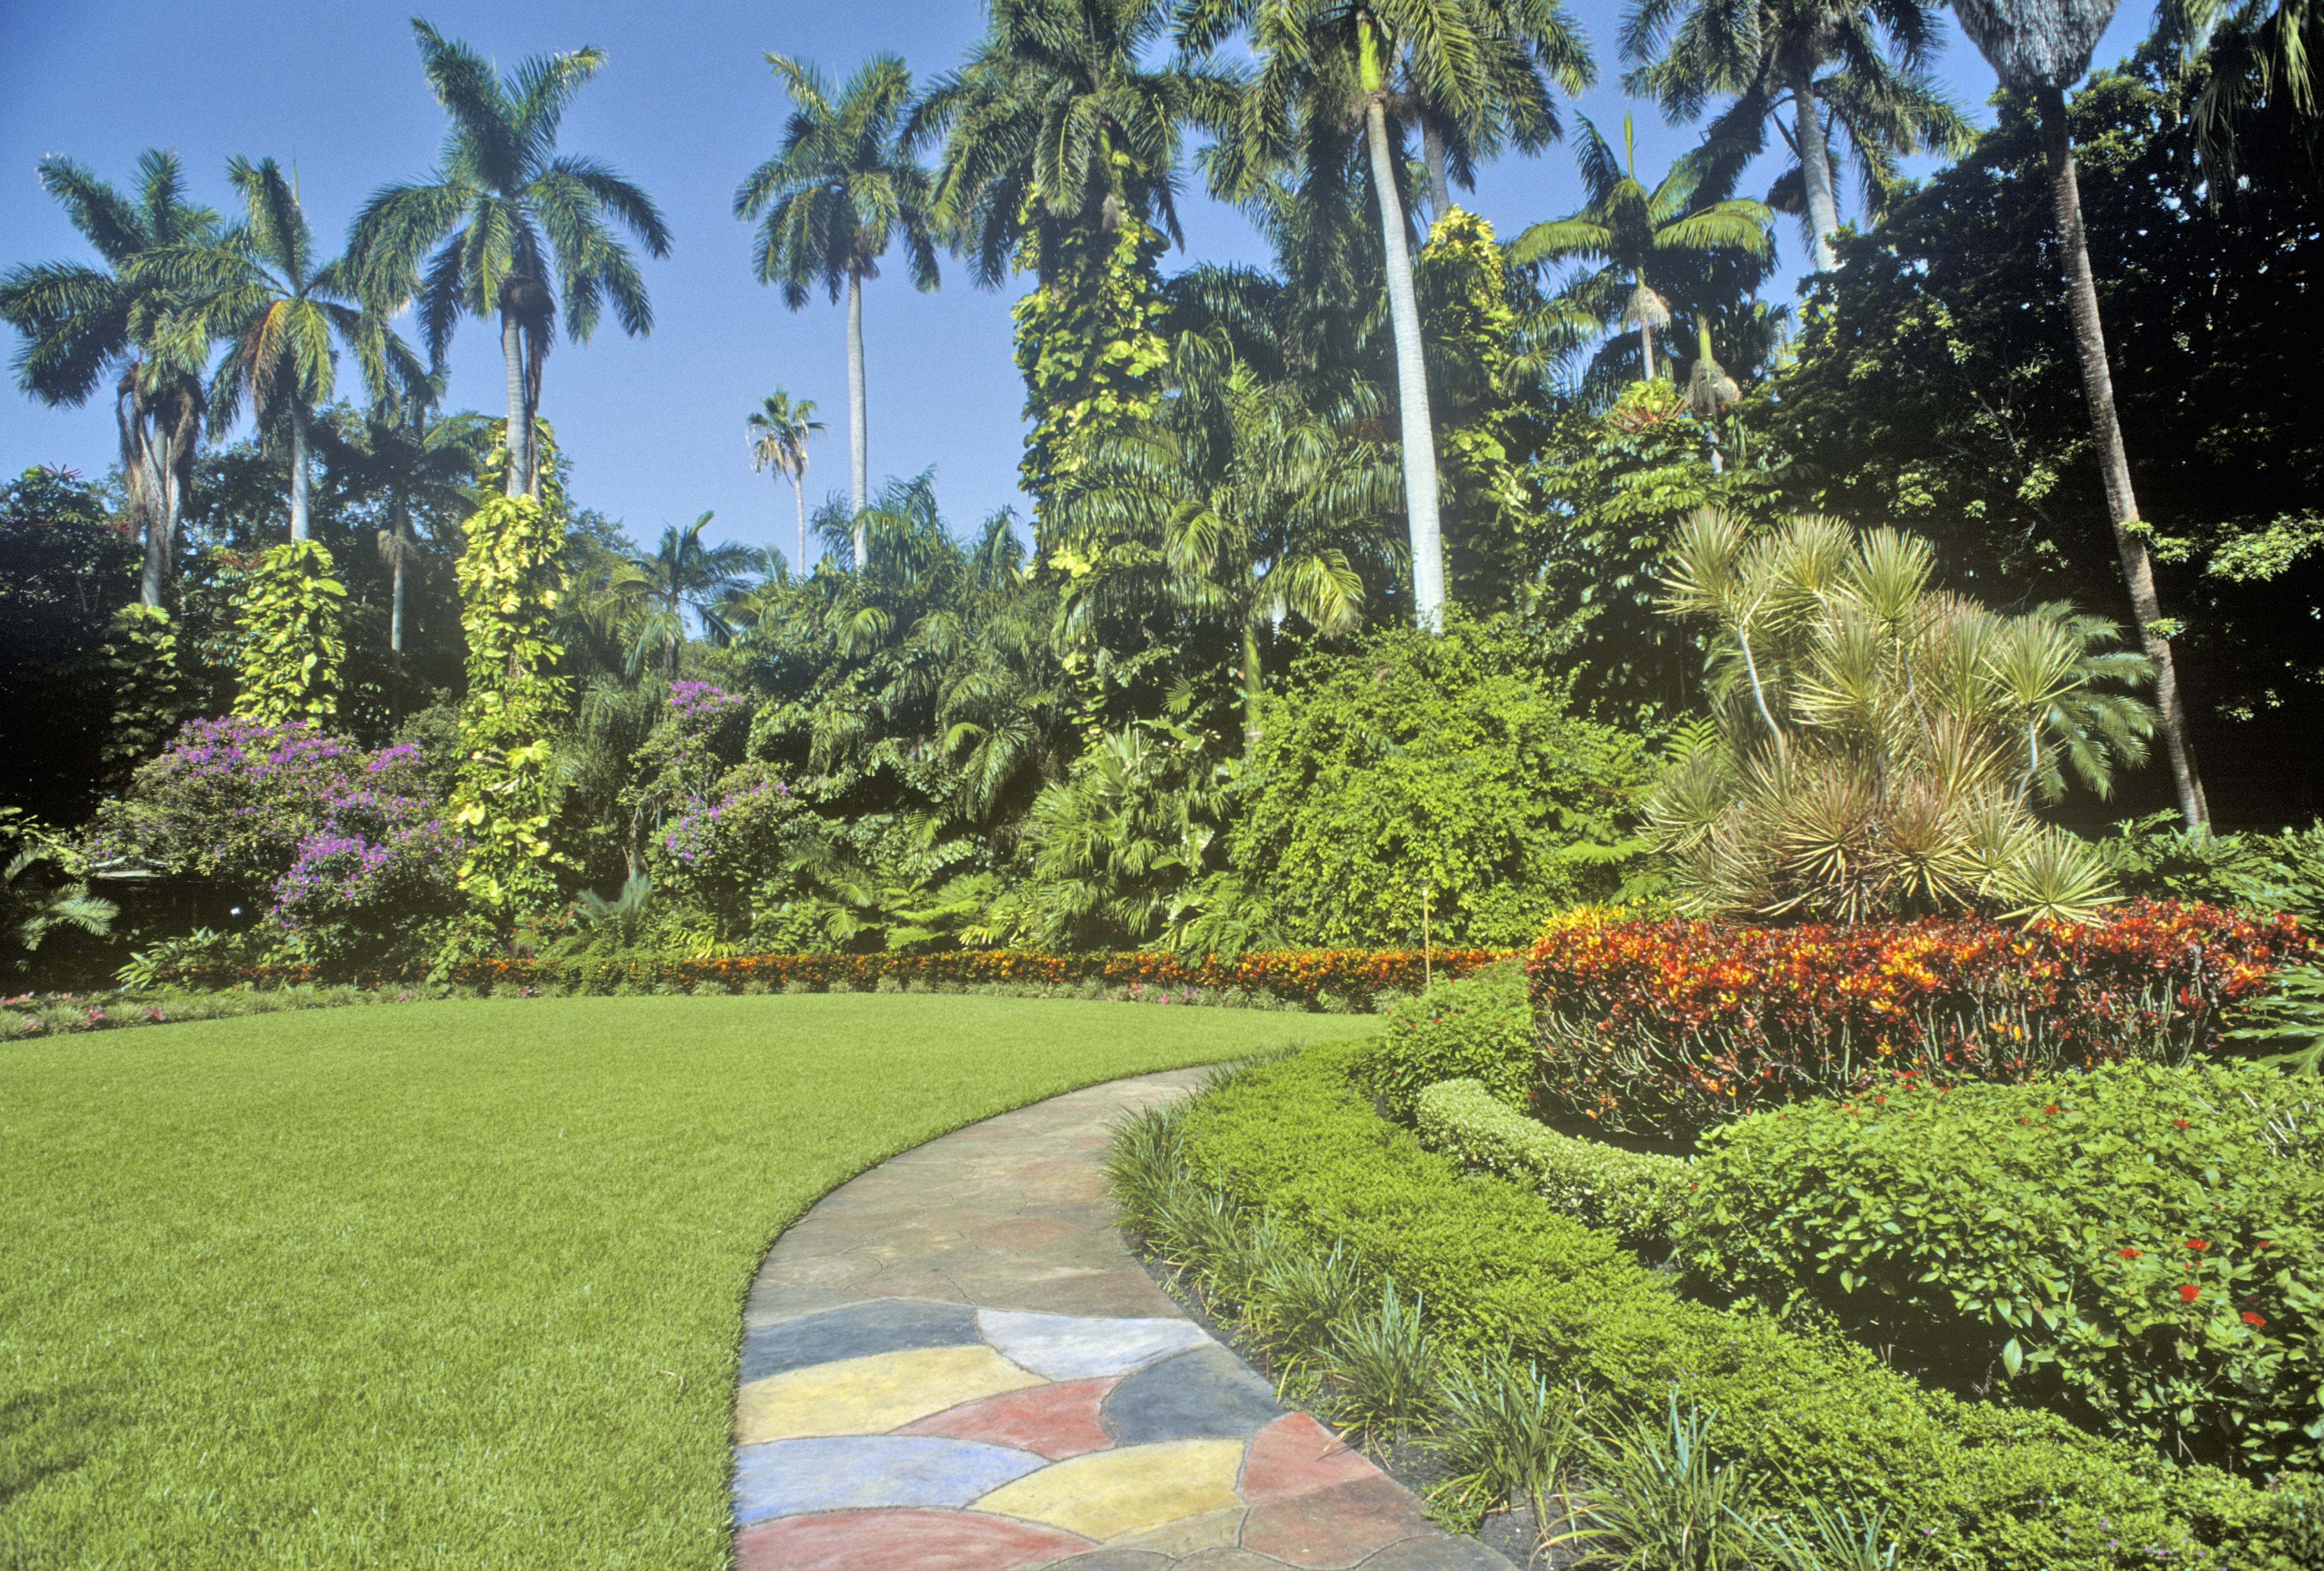 Sunken Gardens Travel Guidebook Must Visit Attractions In St